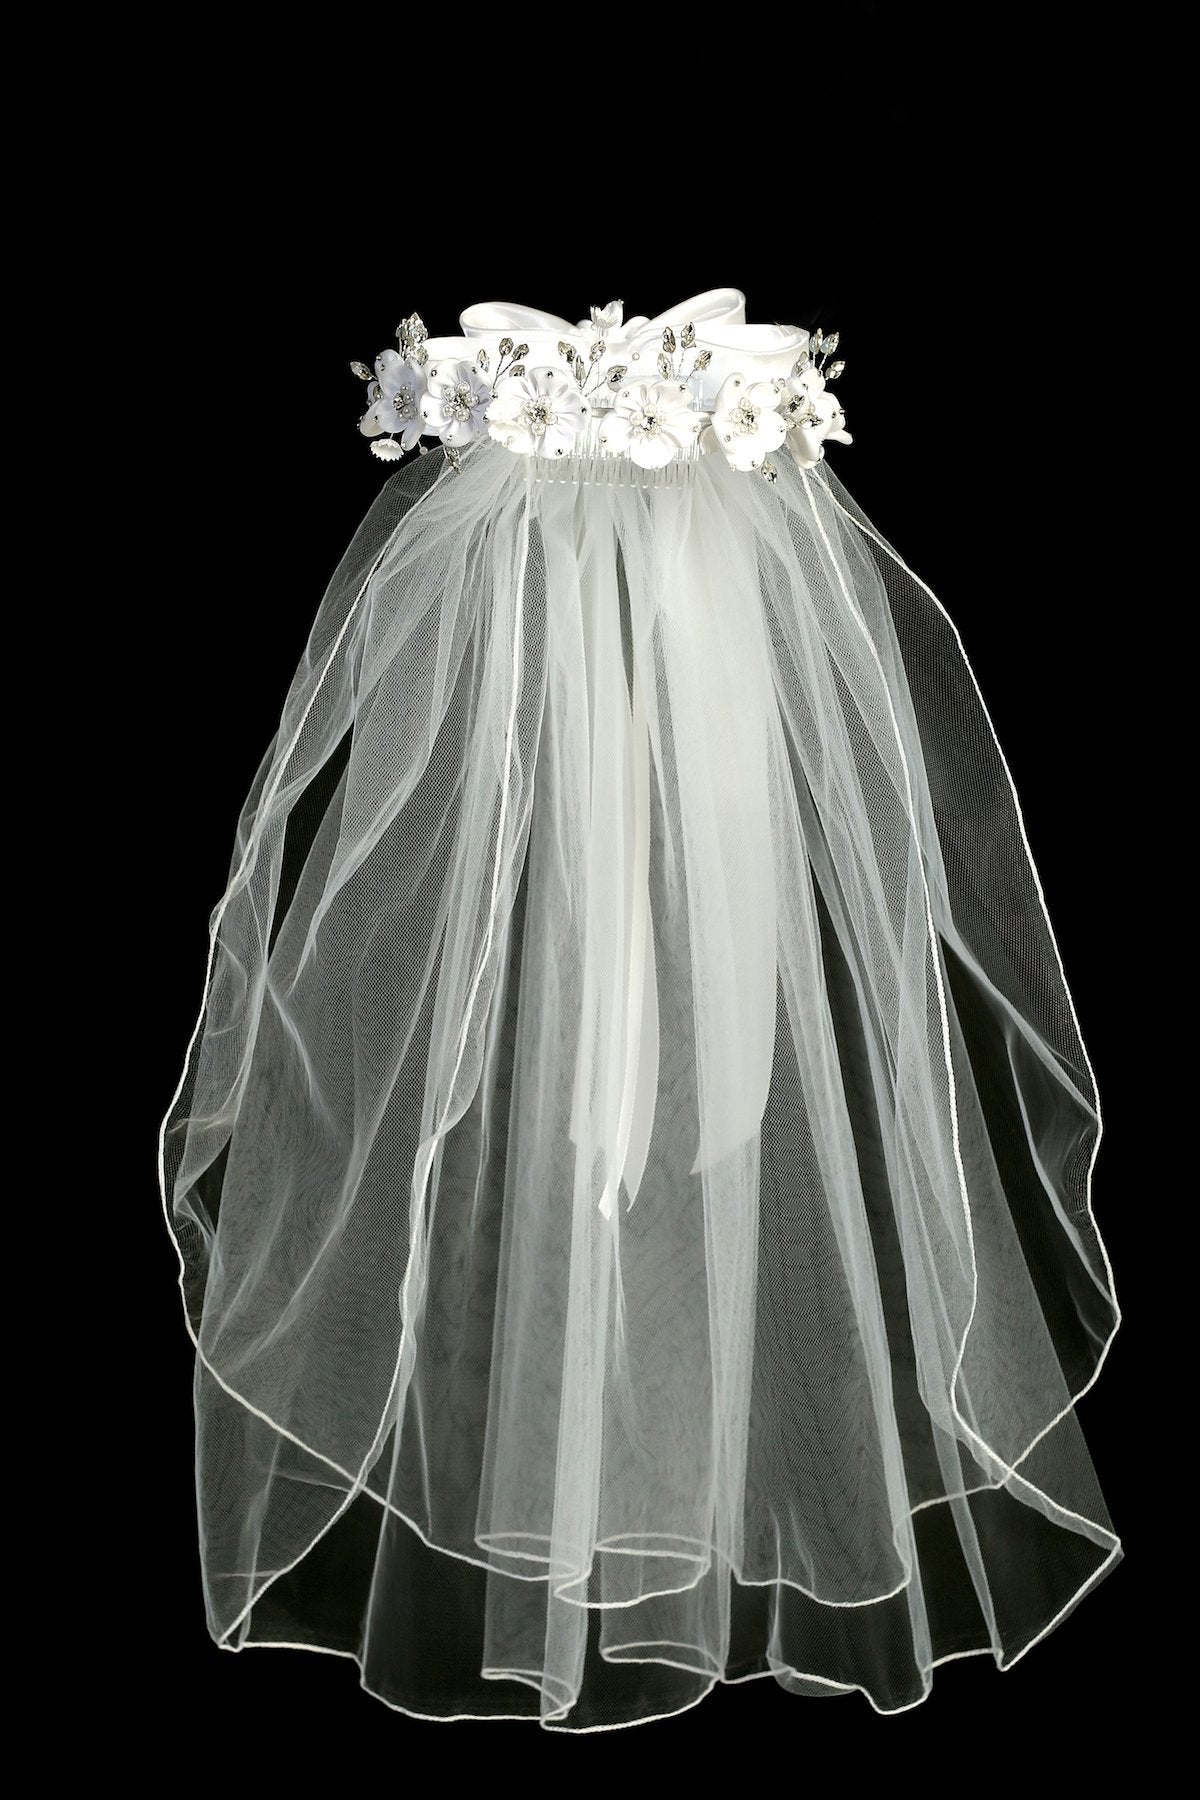 Accessories - White Flower Pearl Rhinestone Crown Veil